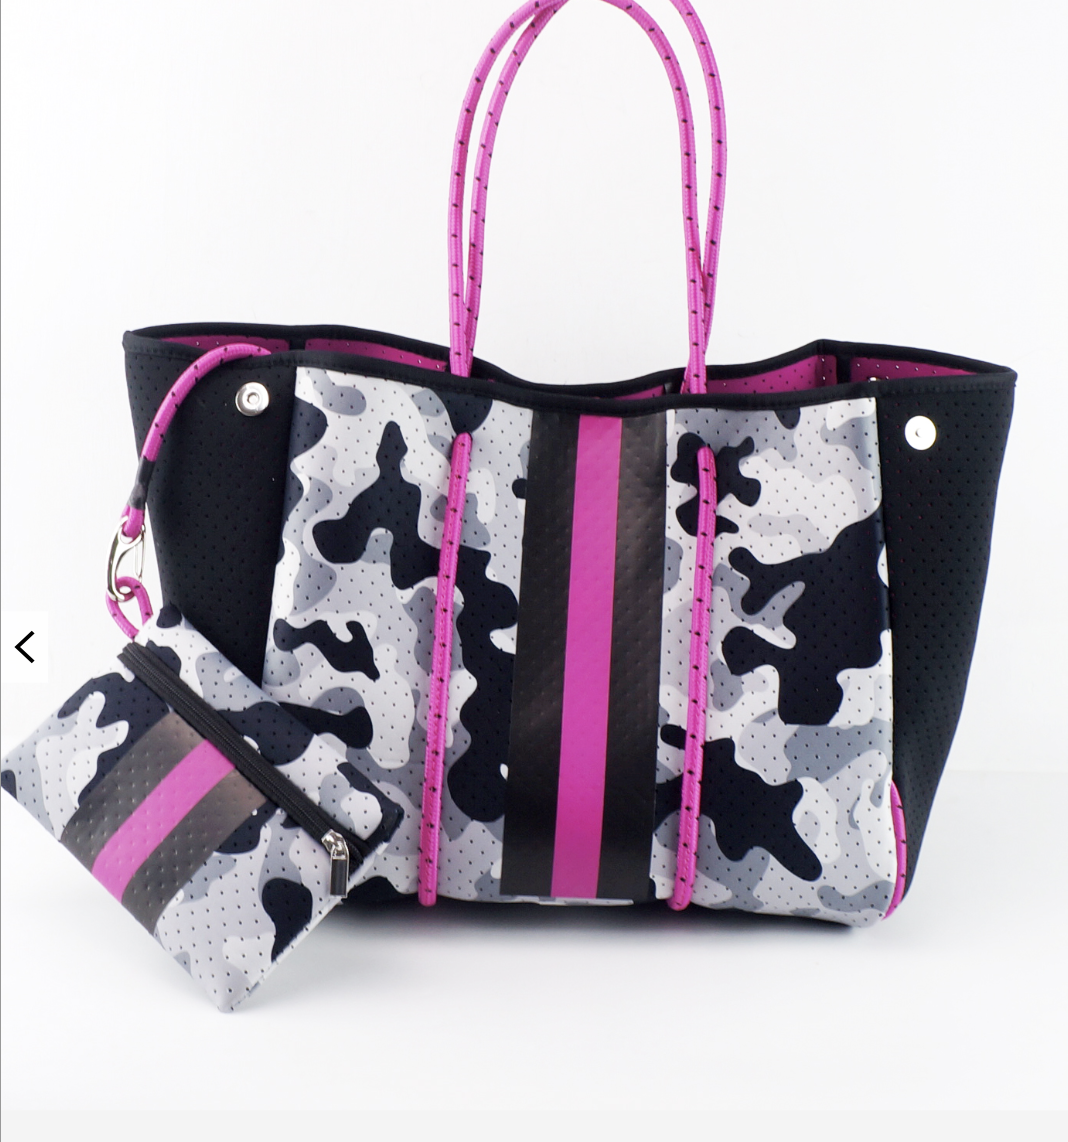 Victorias Secret Crossbody Bag Purse, Snakeskin print 